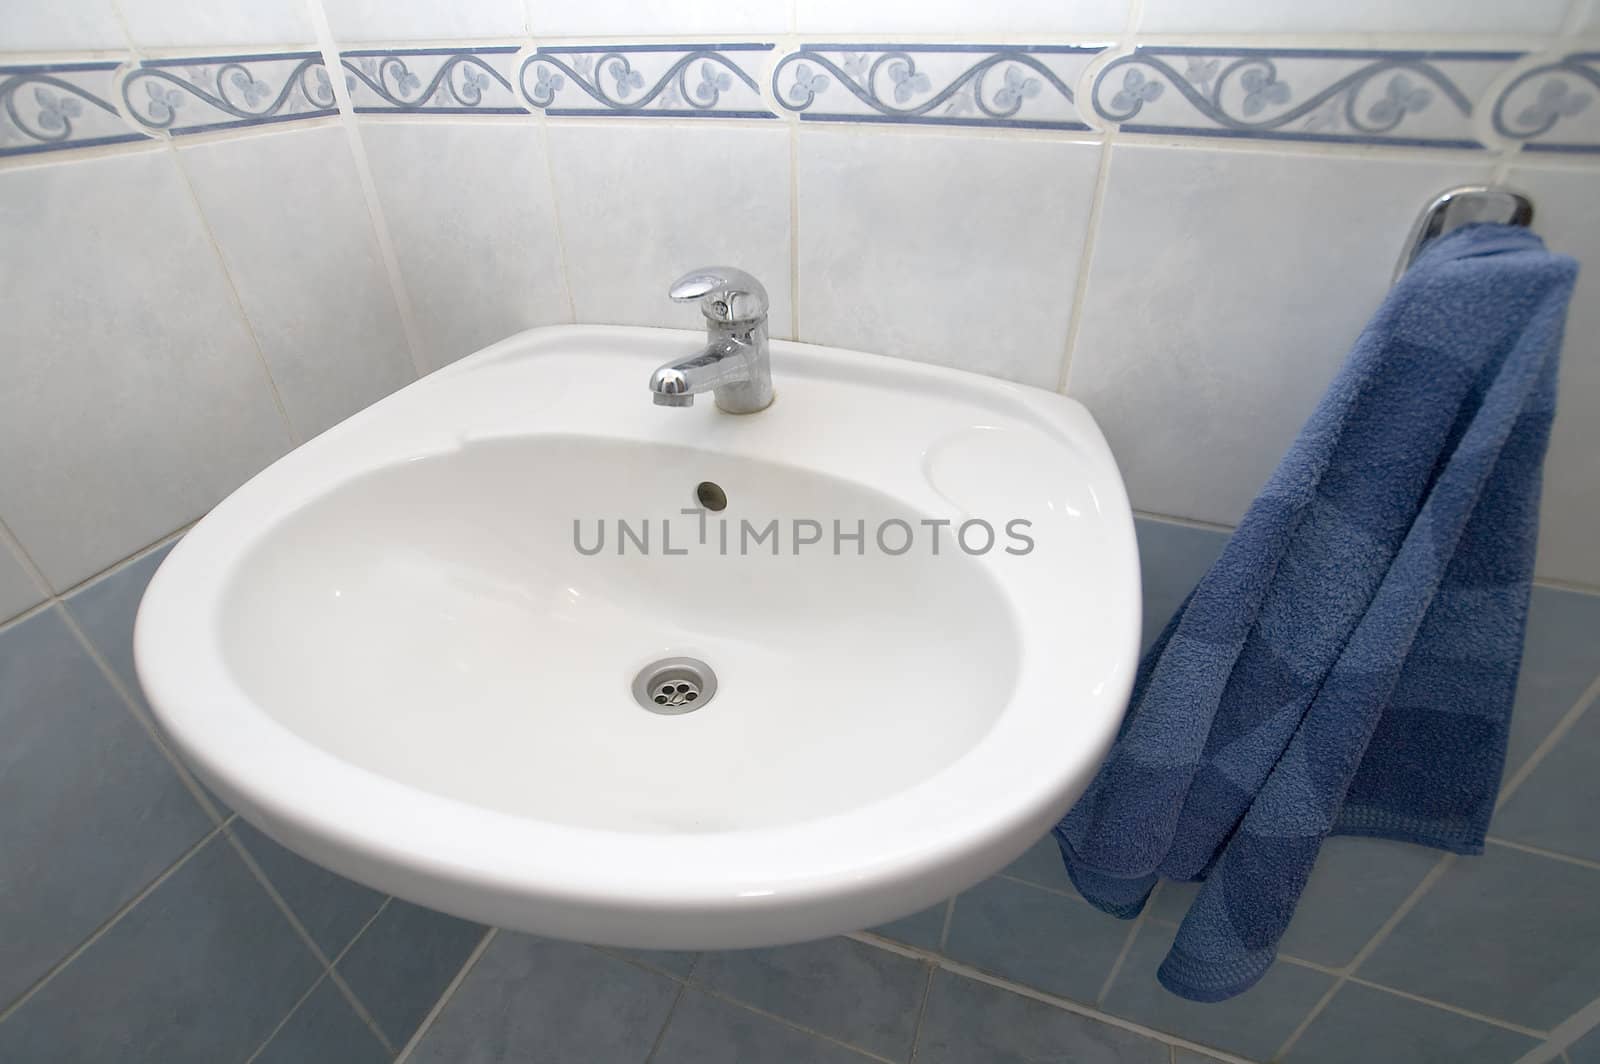 white basin detail photo, blue towel, tiled walls